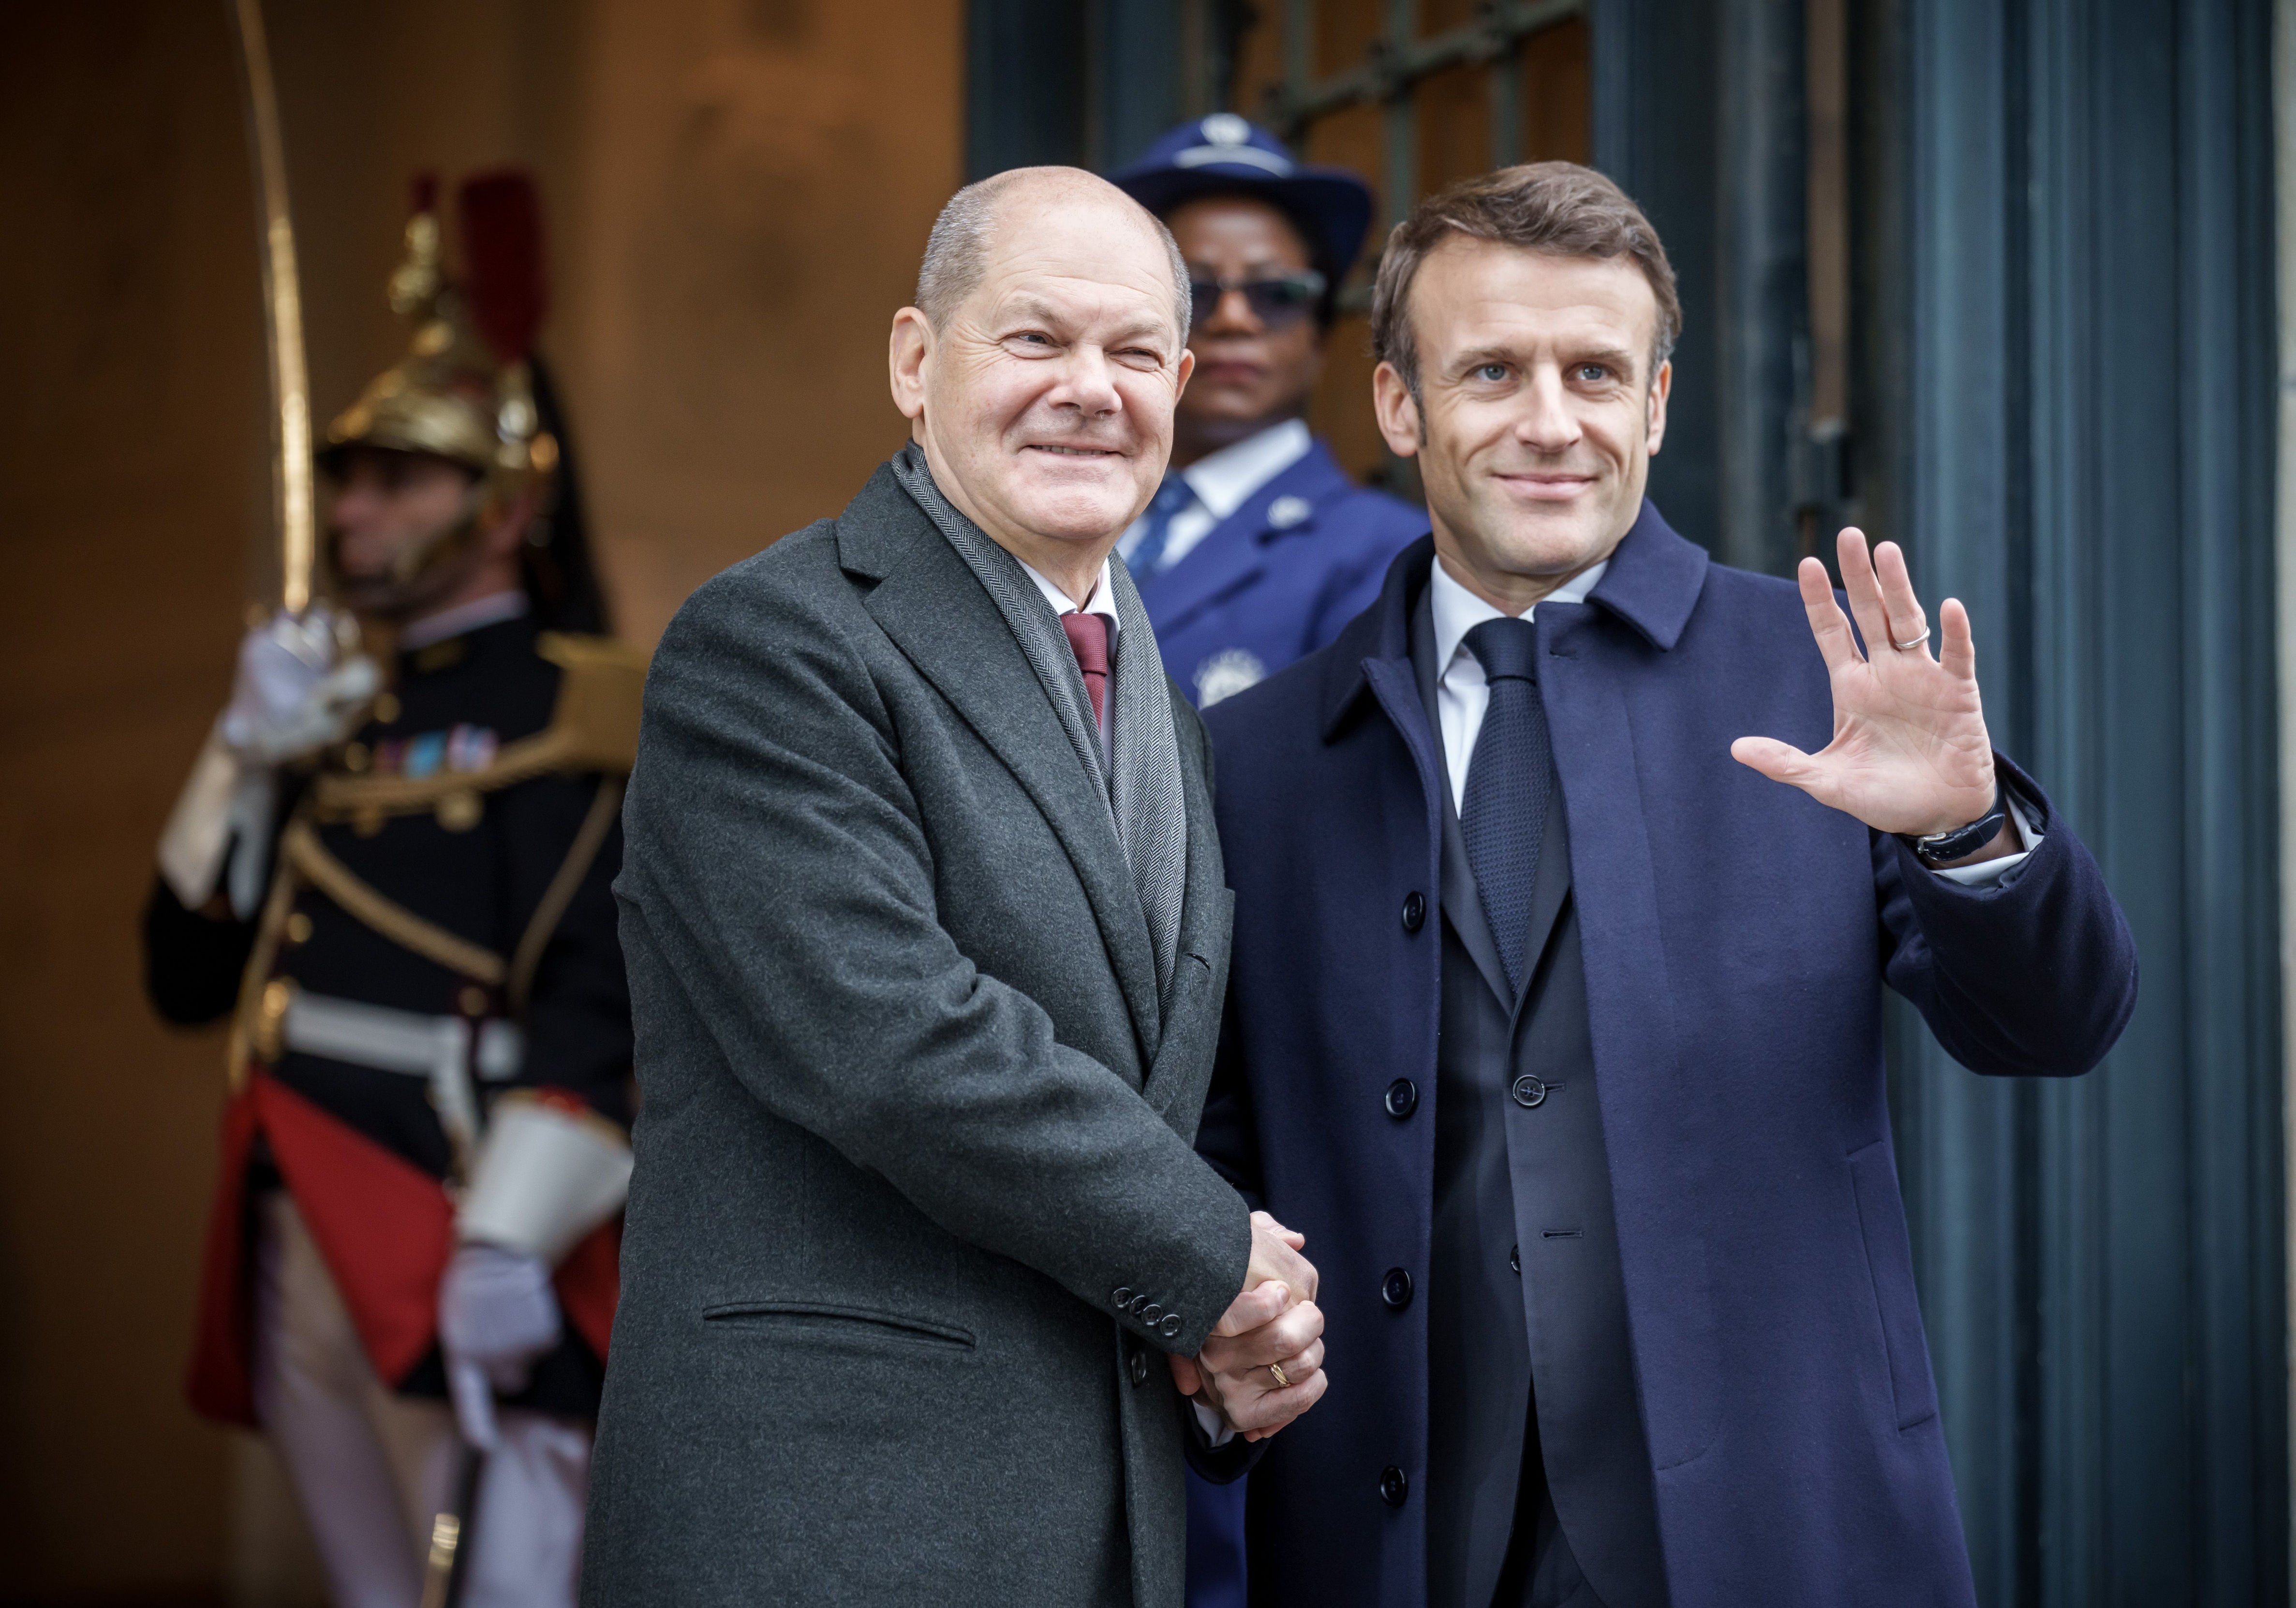 Deutsch-französische Beziehungen - Jubiläumsfeier zum 60-jährigen Bestehen des Élysée-Vertrags - Scholz dankt Frankreich für Freundschaft